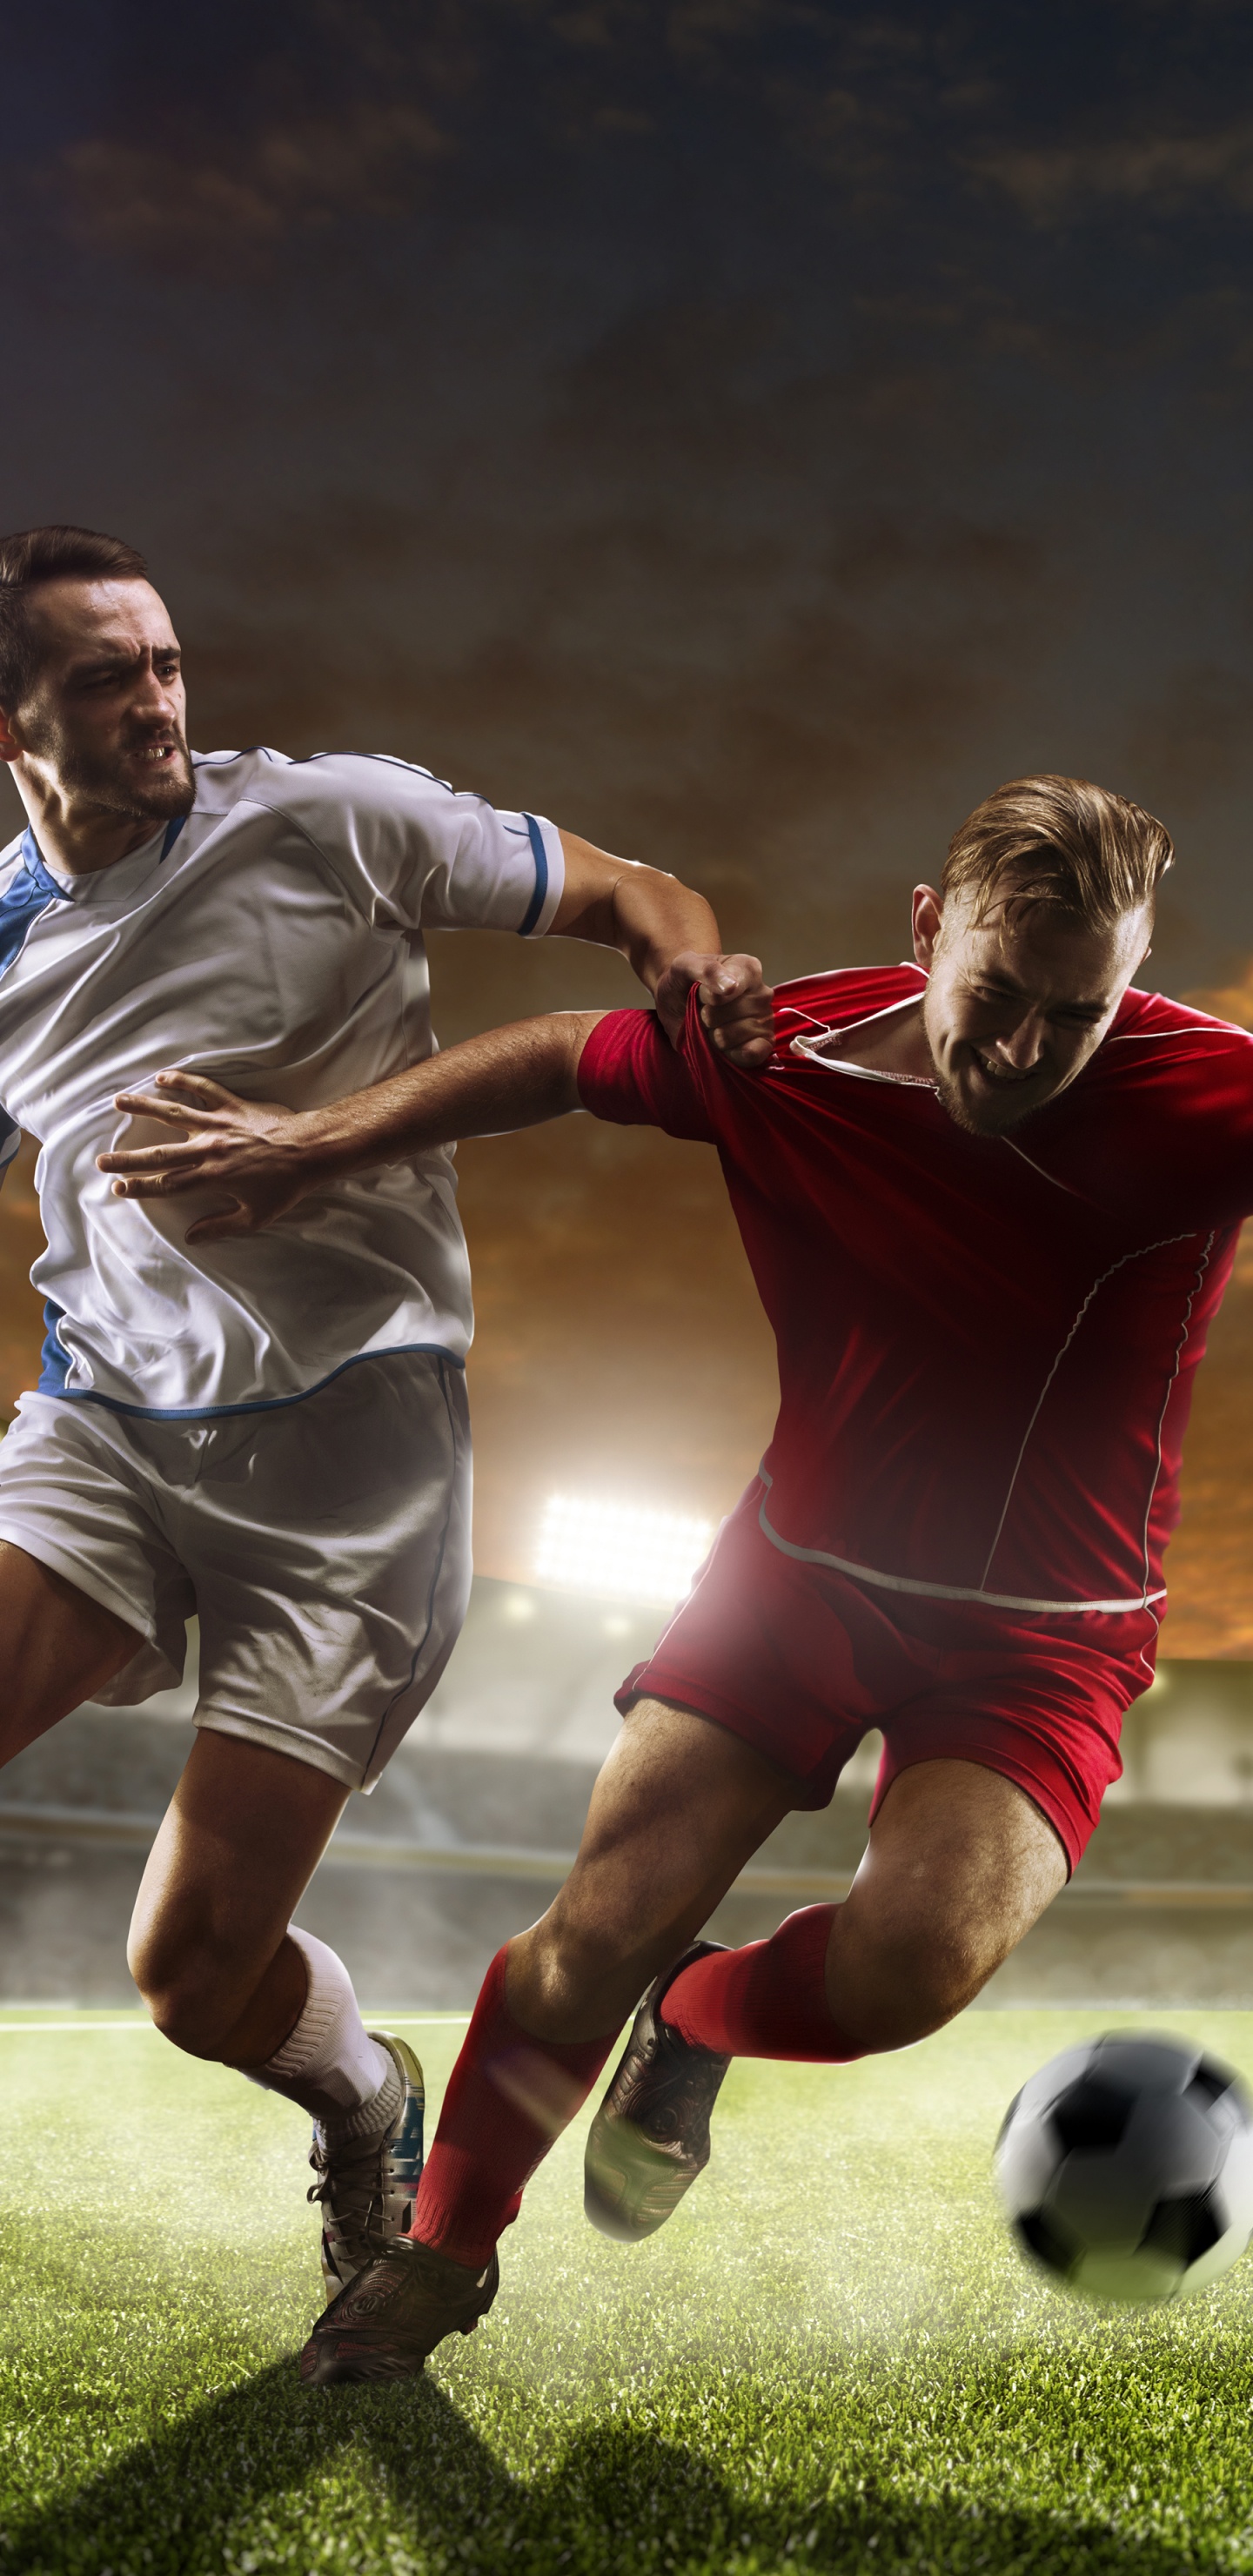 2 Hommes Jouant au Football Sur Terrain en Herbe Verte Pendant la Nuit. Wallpaper in 1440x2960 Resolution